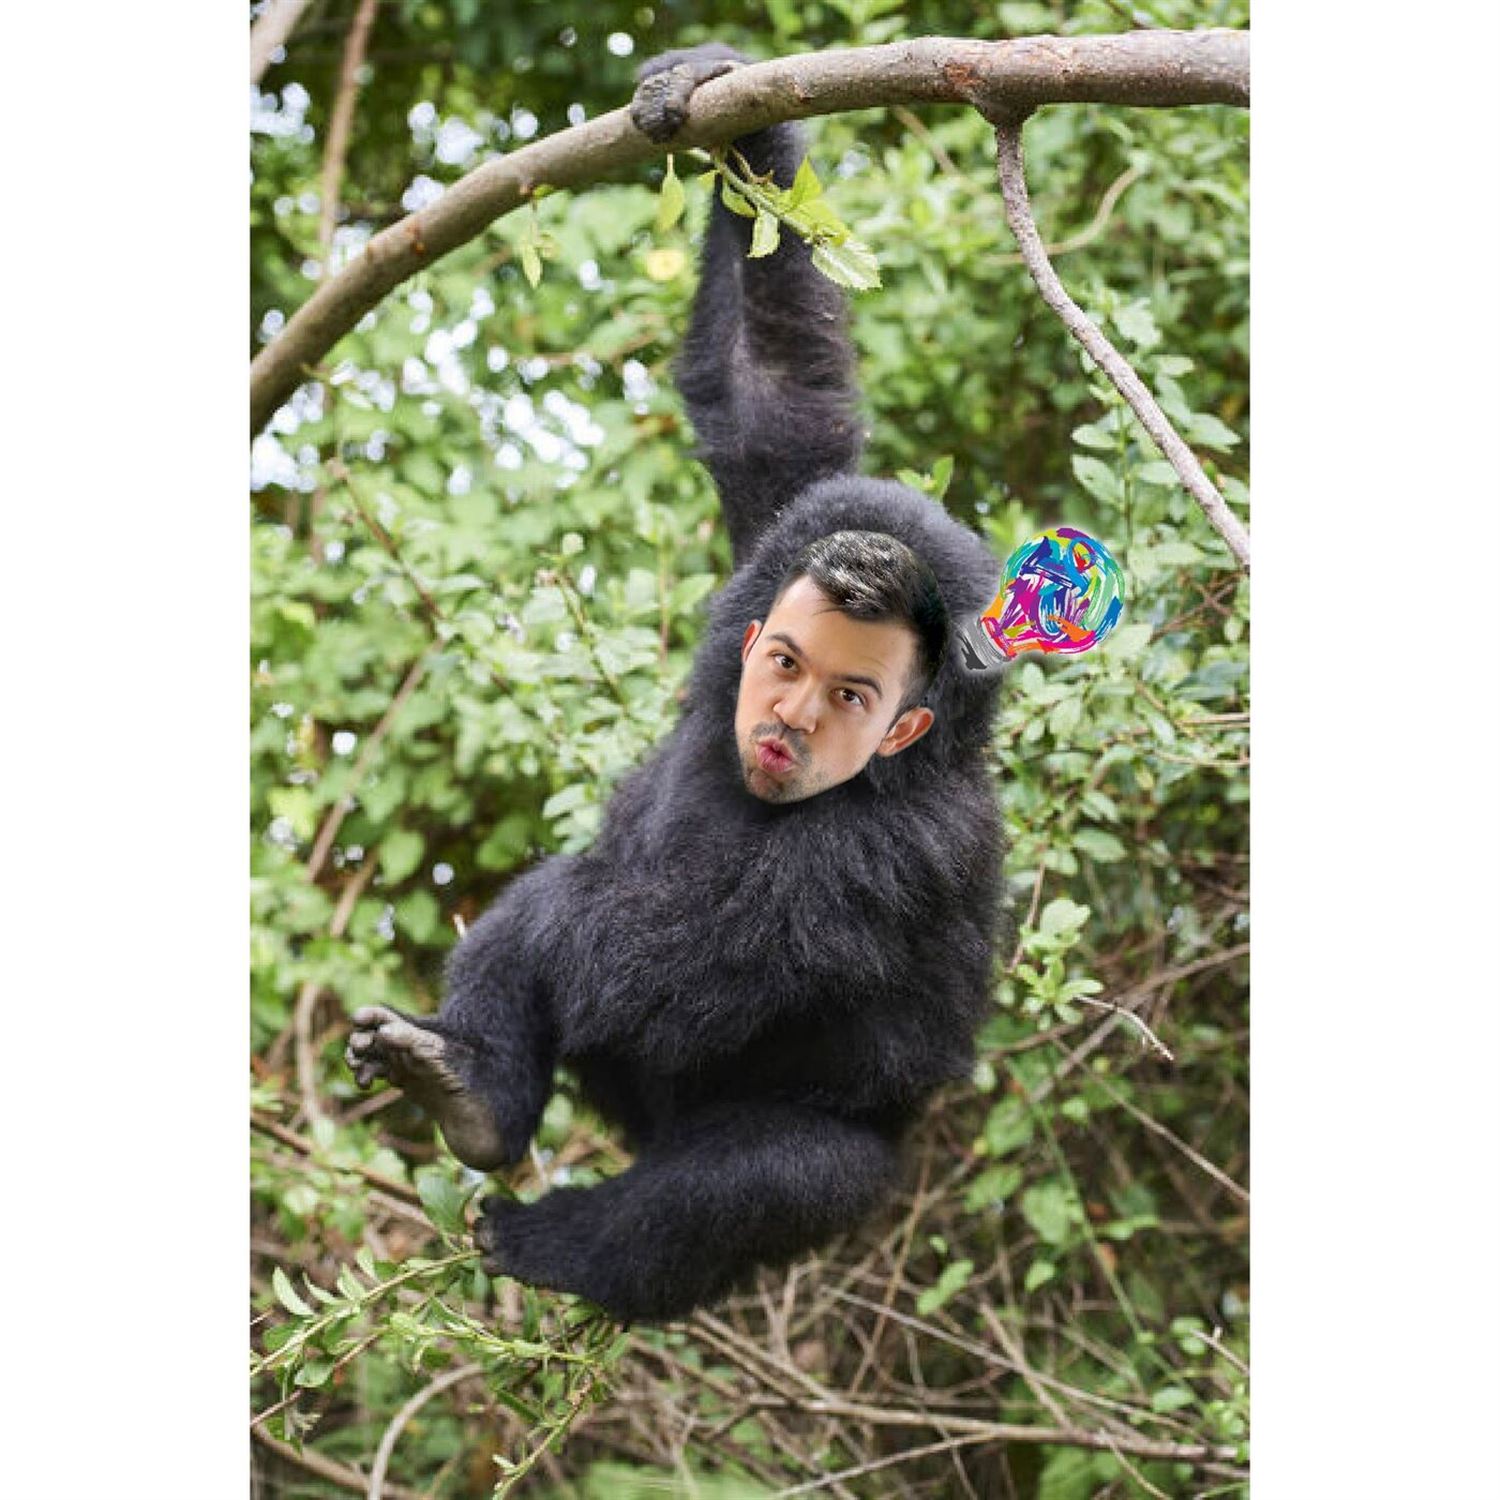 Juan the creative monkey